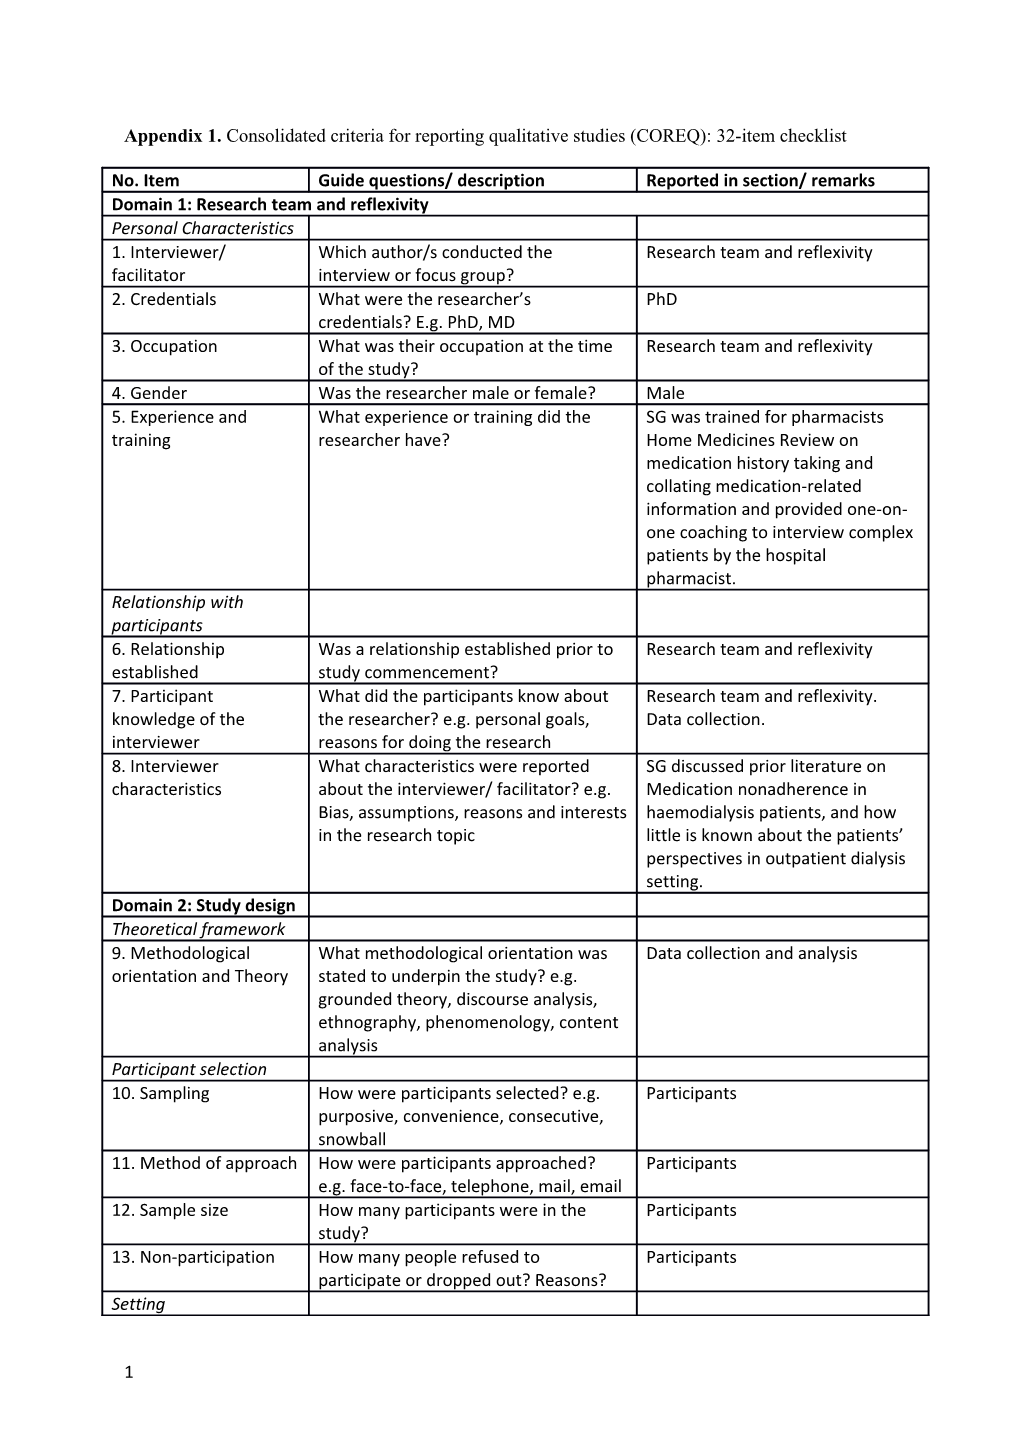 Appendix 1. Consolidated Criteria for Reporting Qualitative Studies (COREQ): 32-Item Checklist